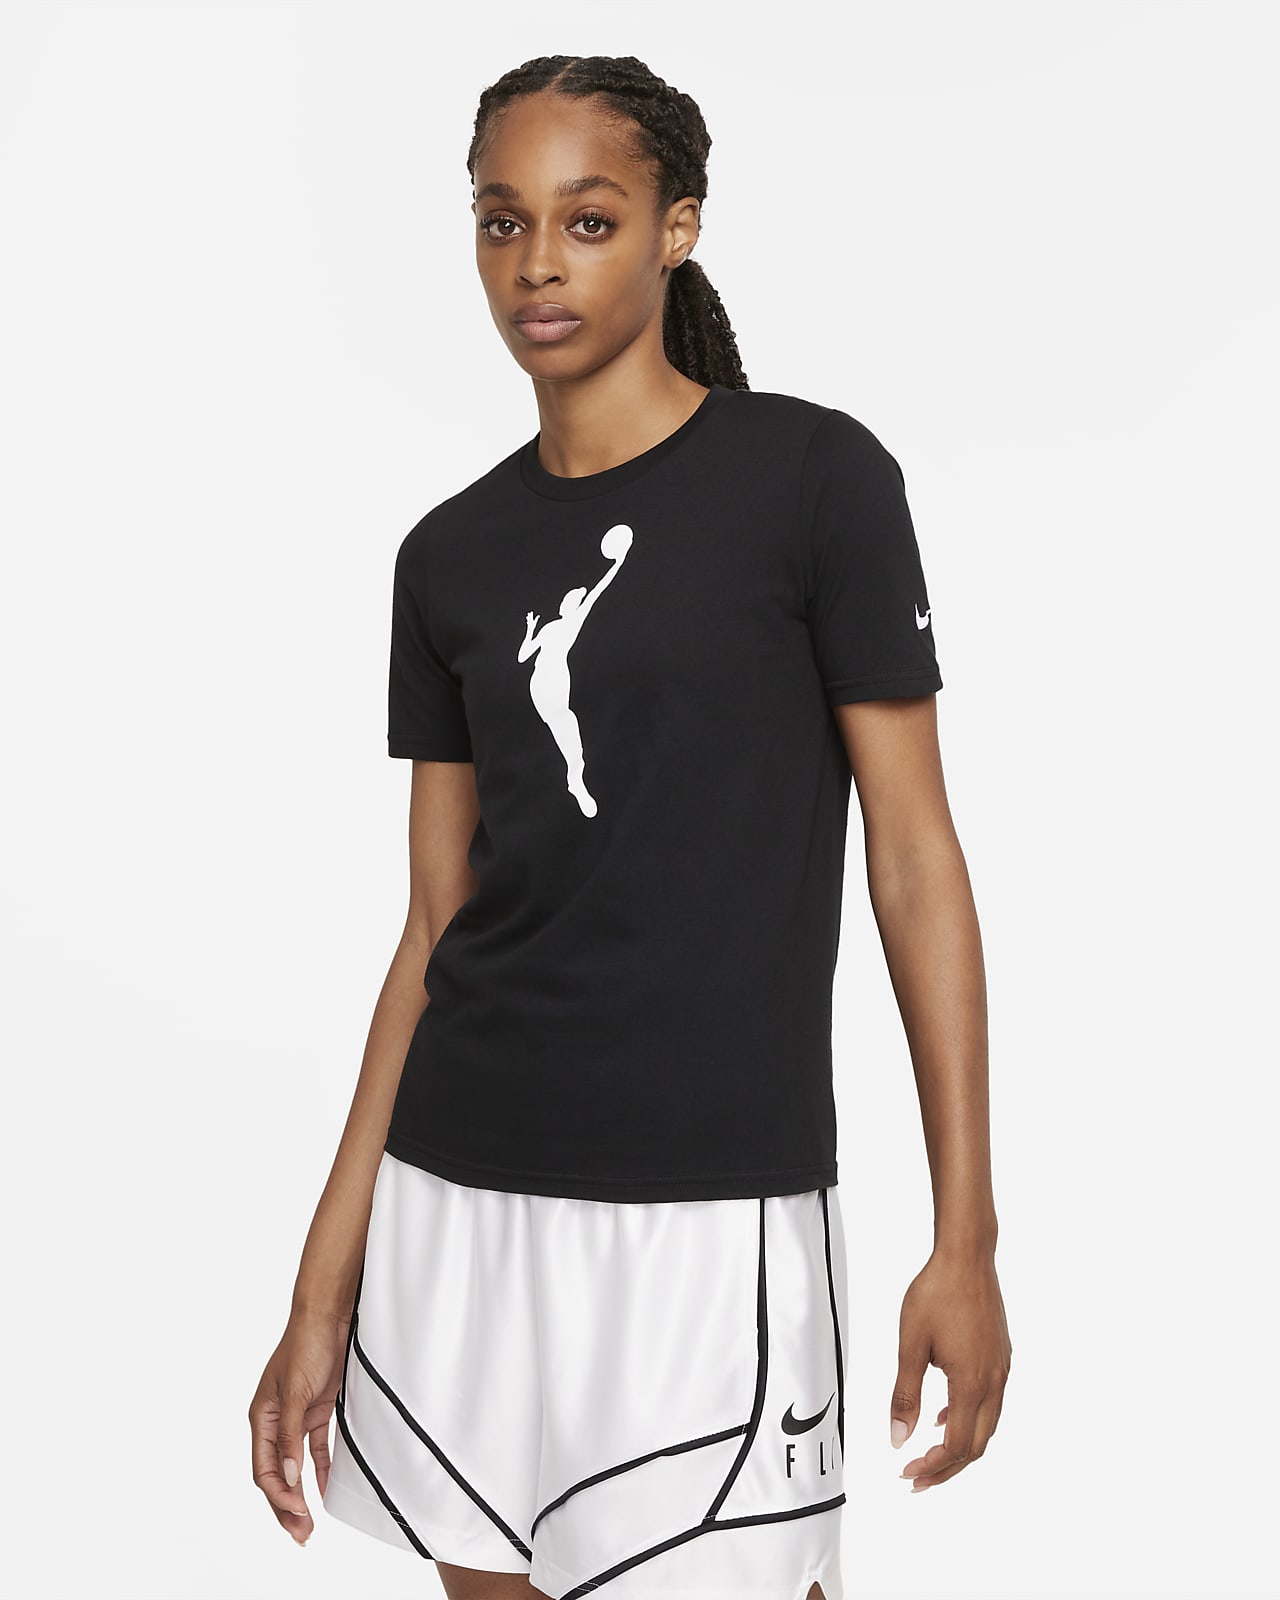 Team 13 Nike WNBA-T-shirten til større børn